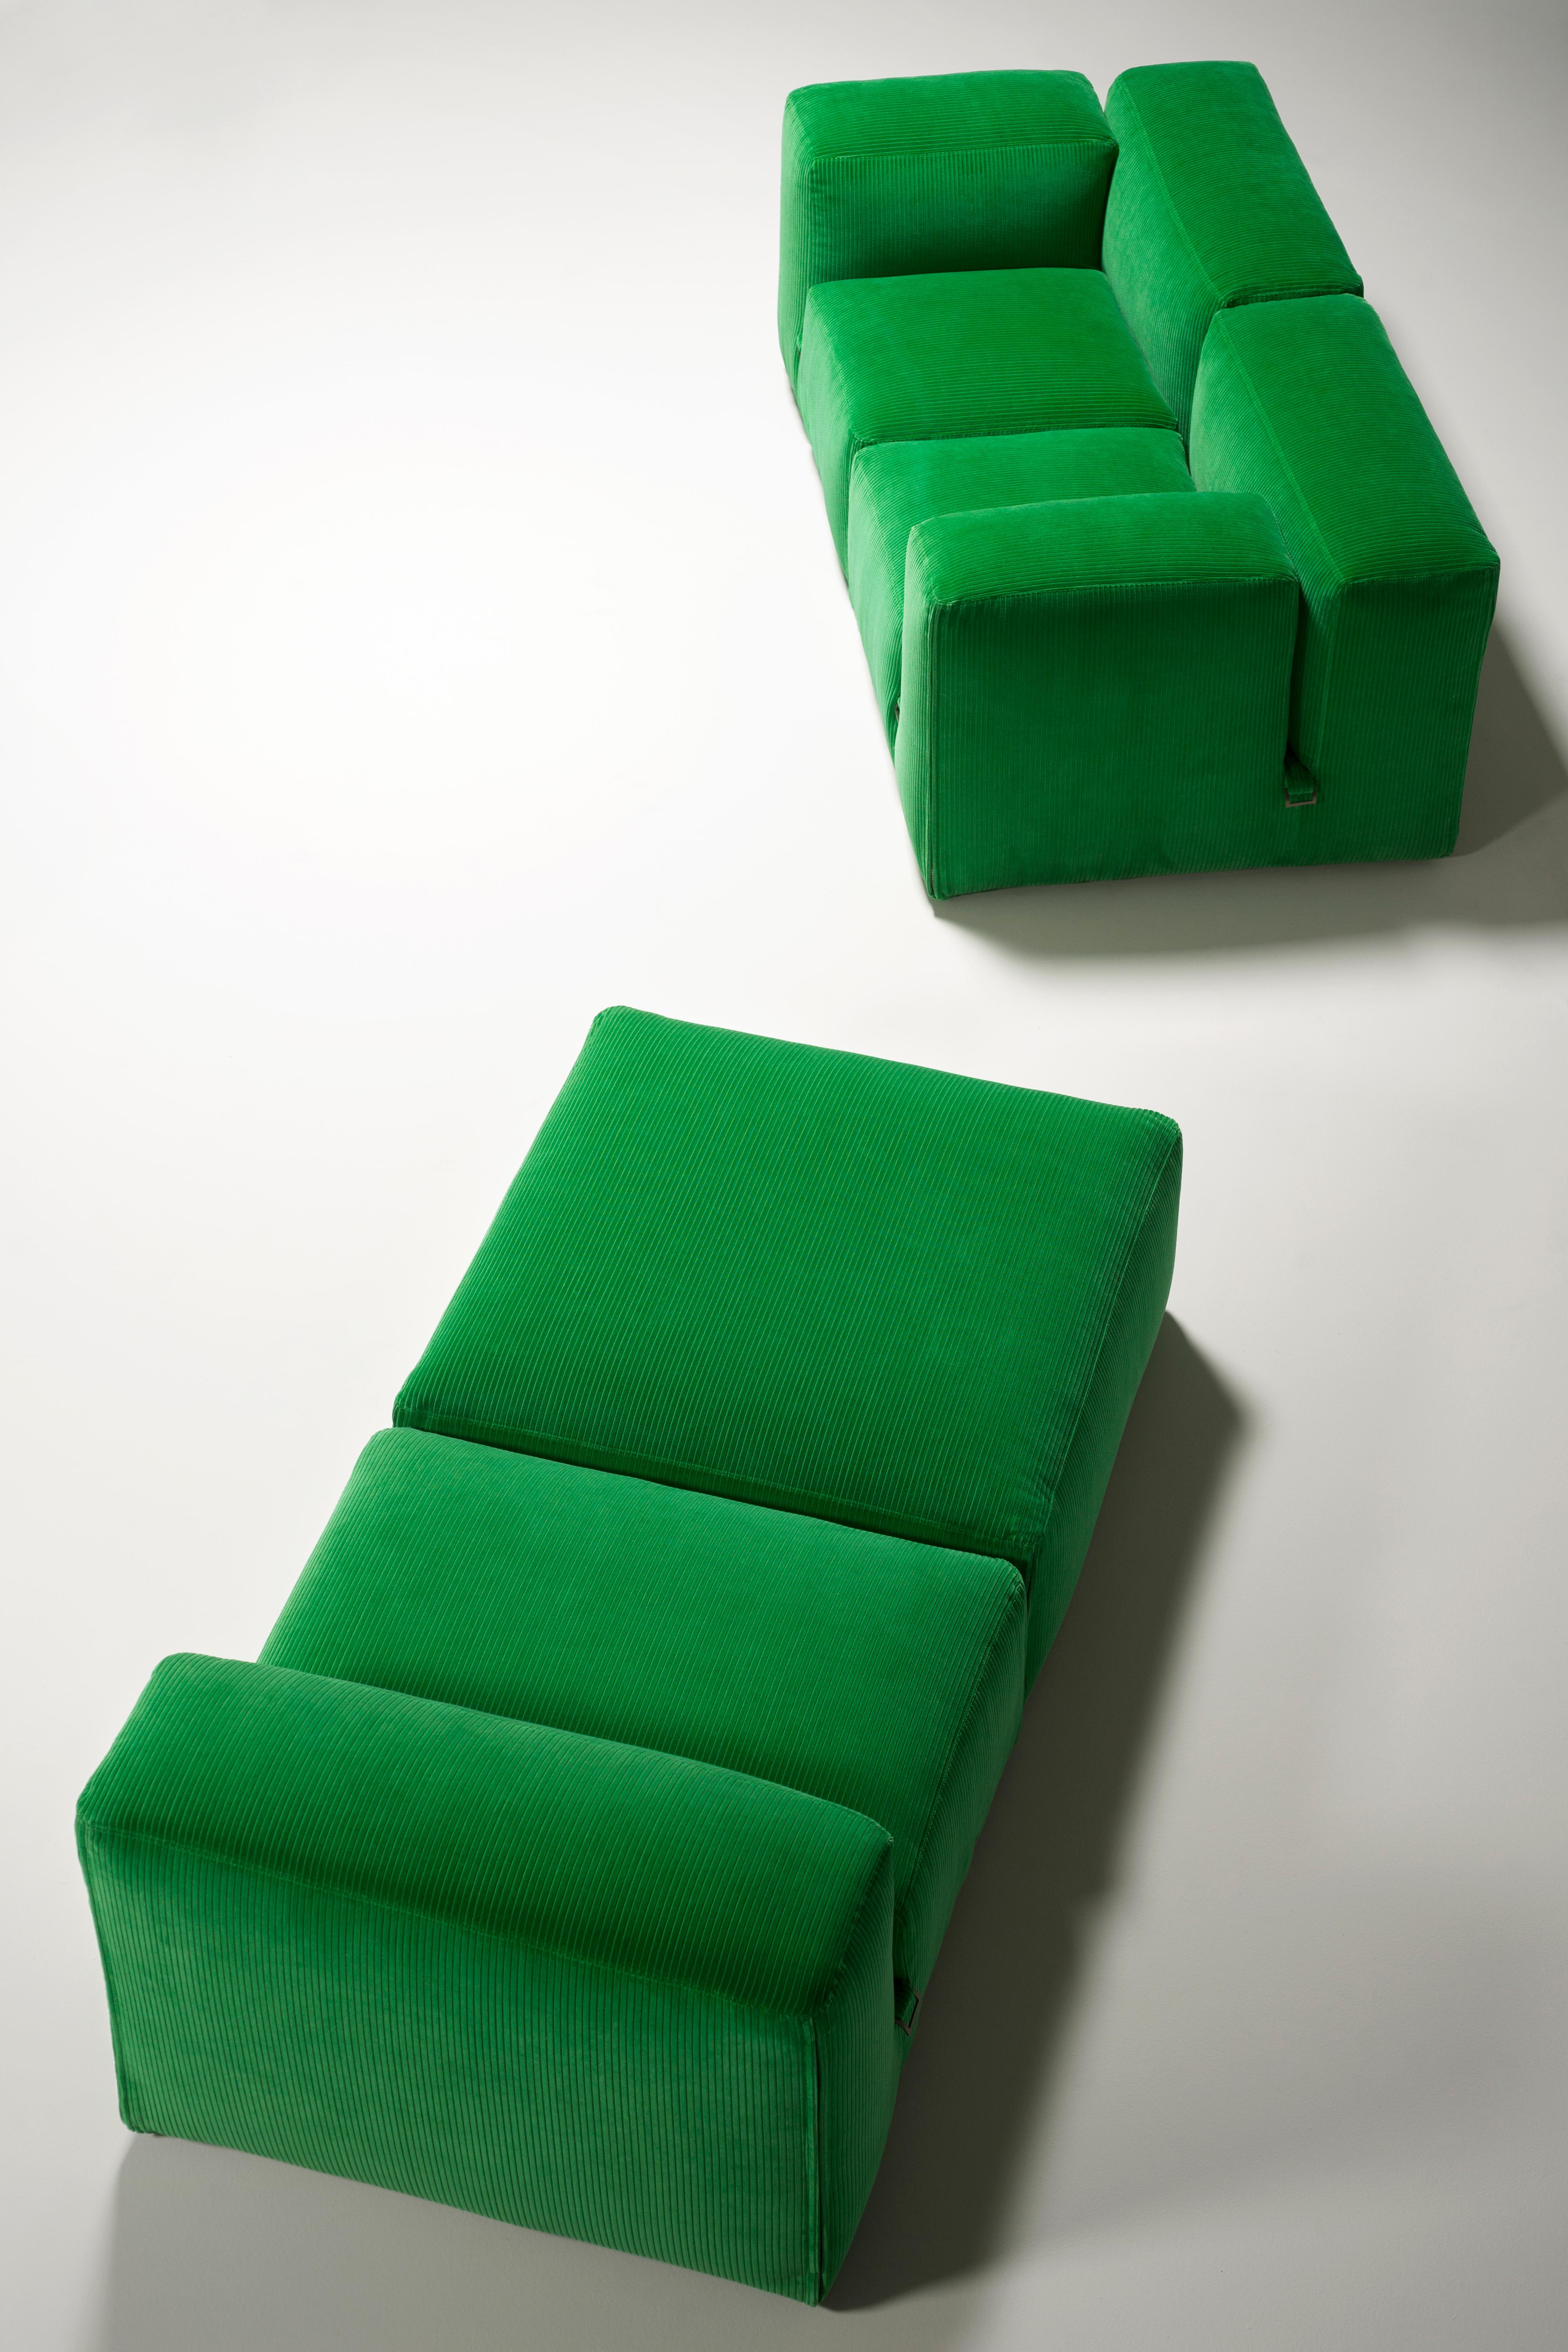 Tacchini Le Mura Modular Sofa conçu par Mario Bellini Neuf - En vente à Brooklyn, NY